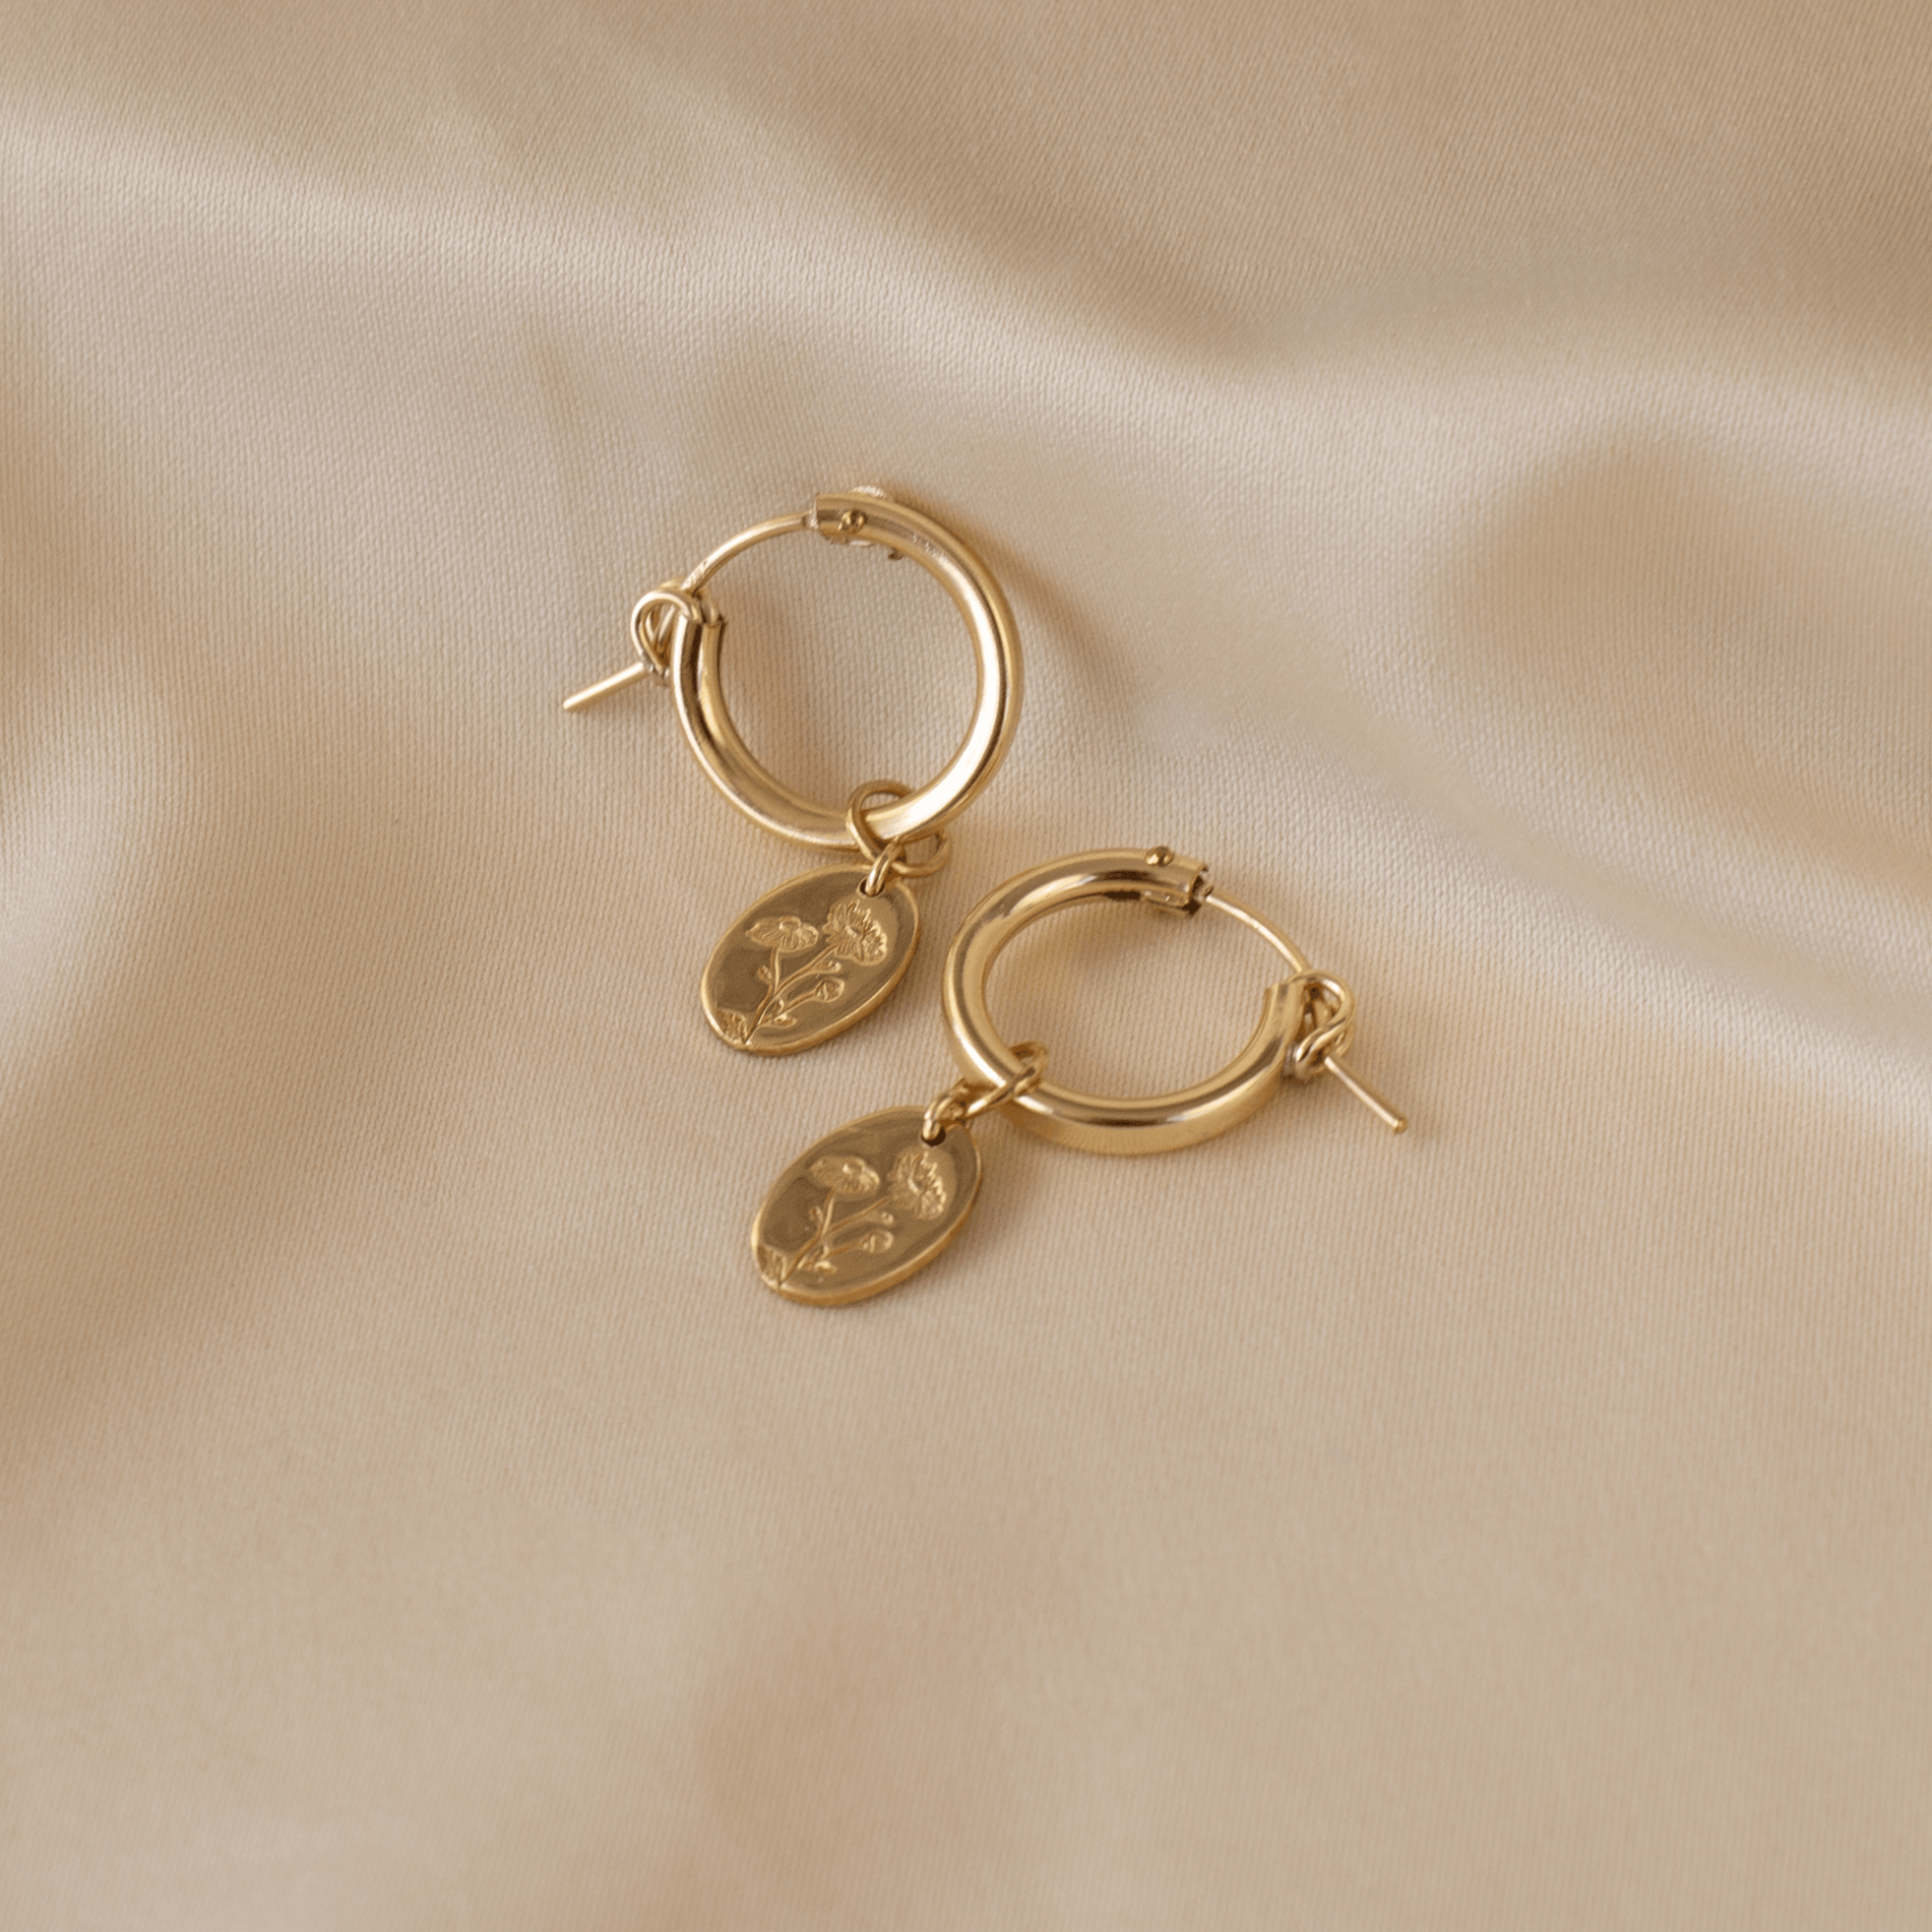 Fleur Birth Flower Hoop Earrings - Nolia Jewelry - Meaningful + Sustainably Handcrafted Jewelry